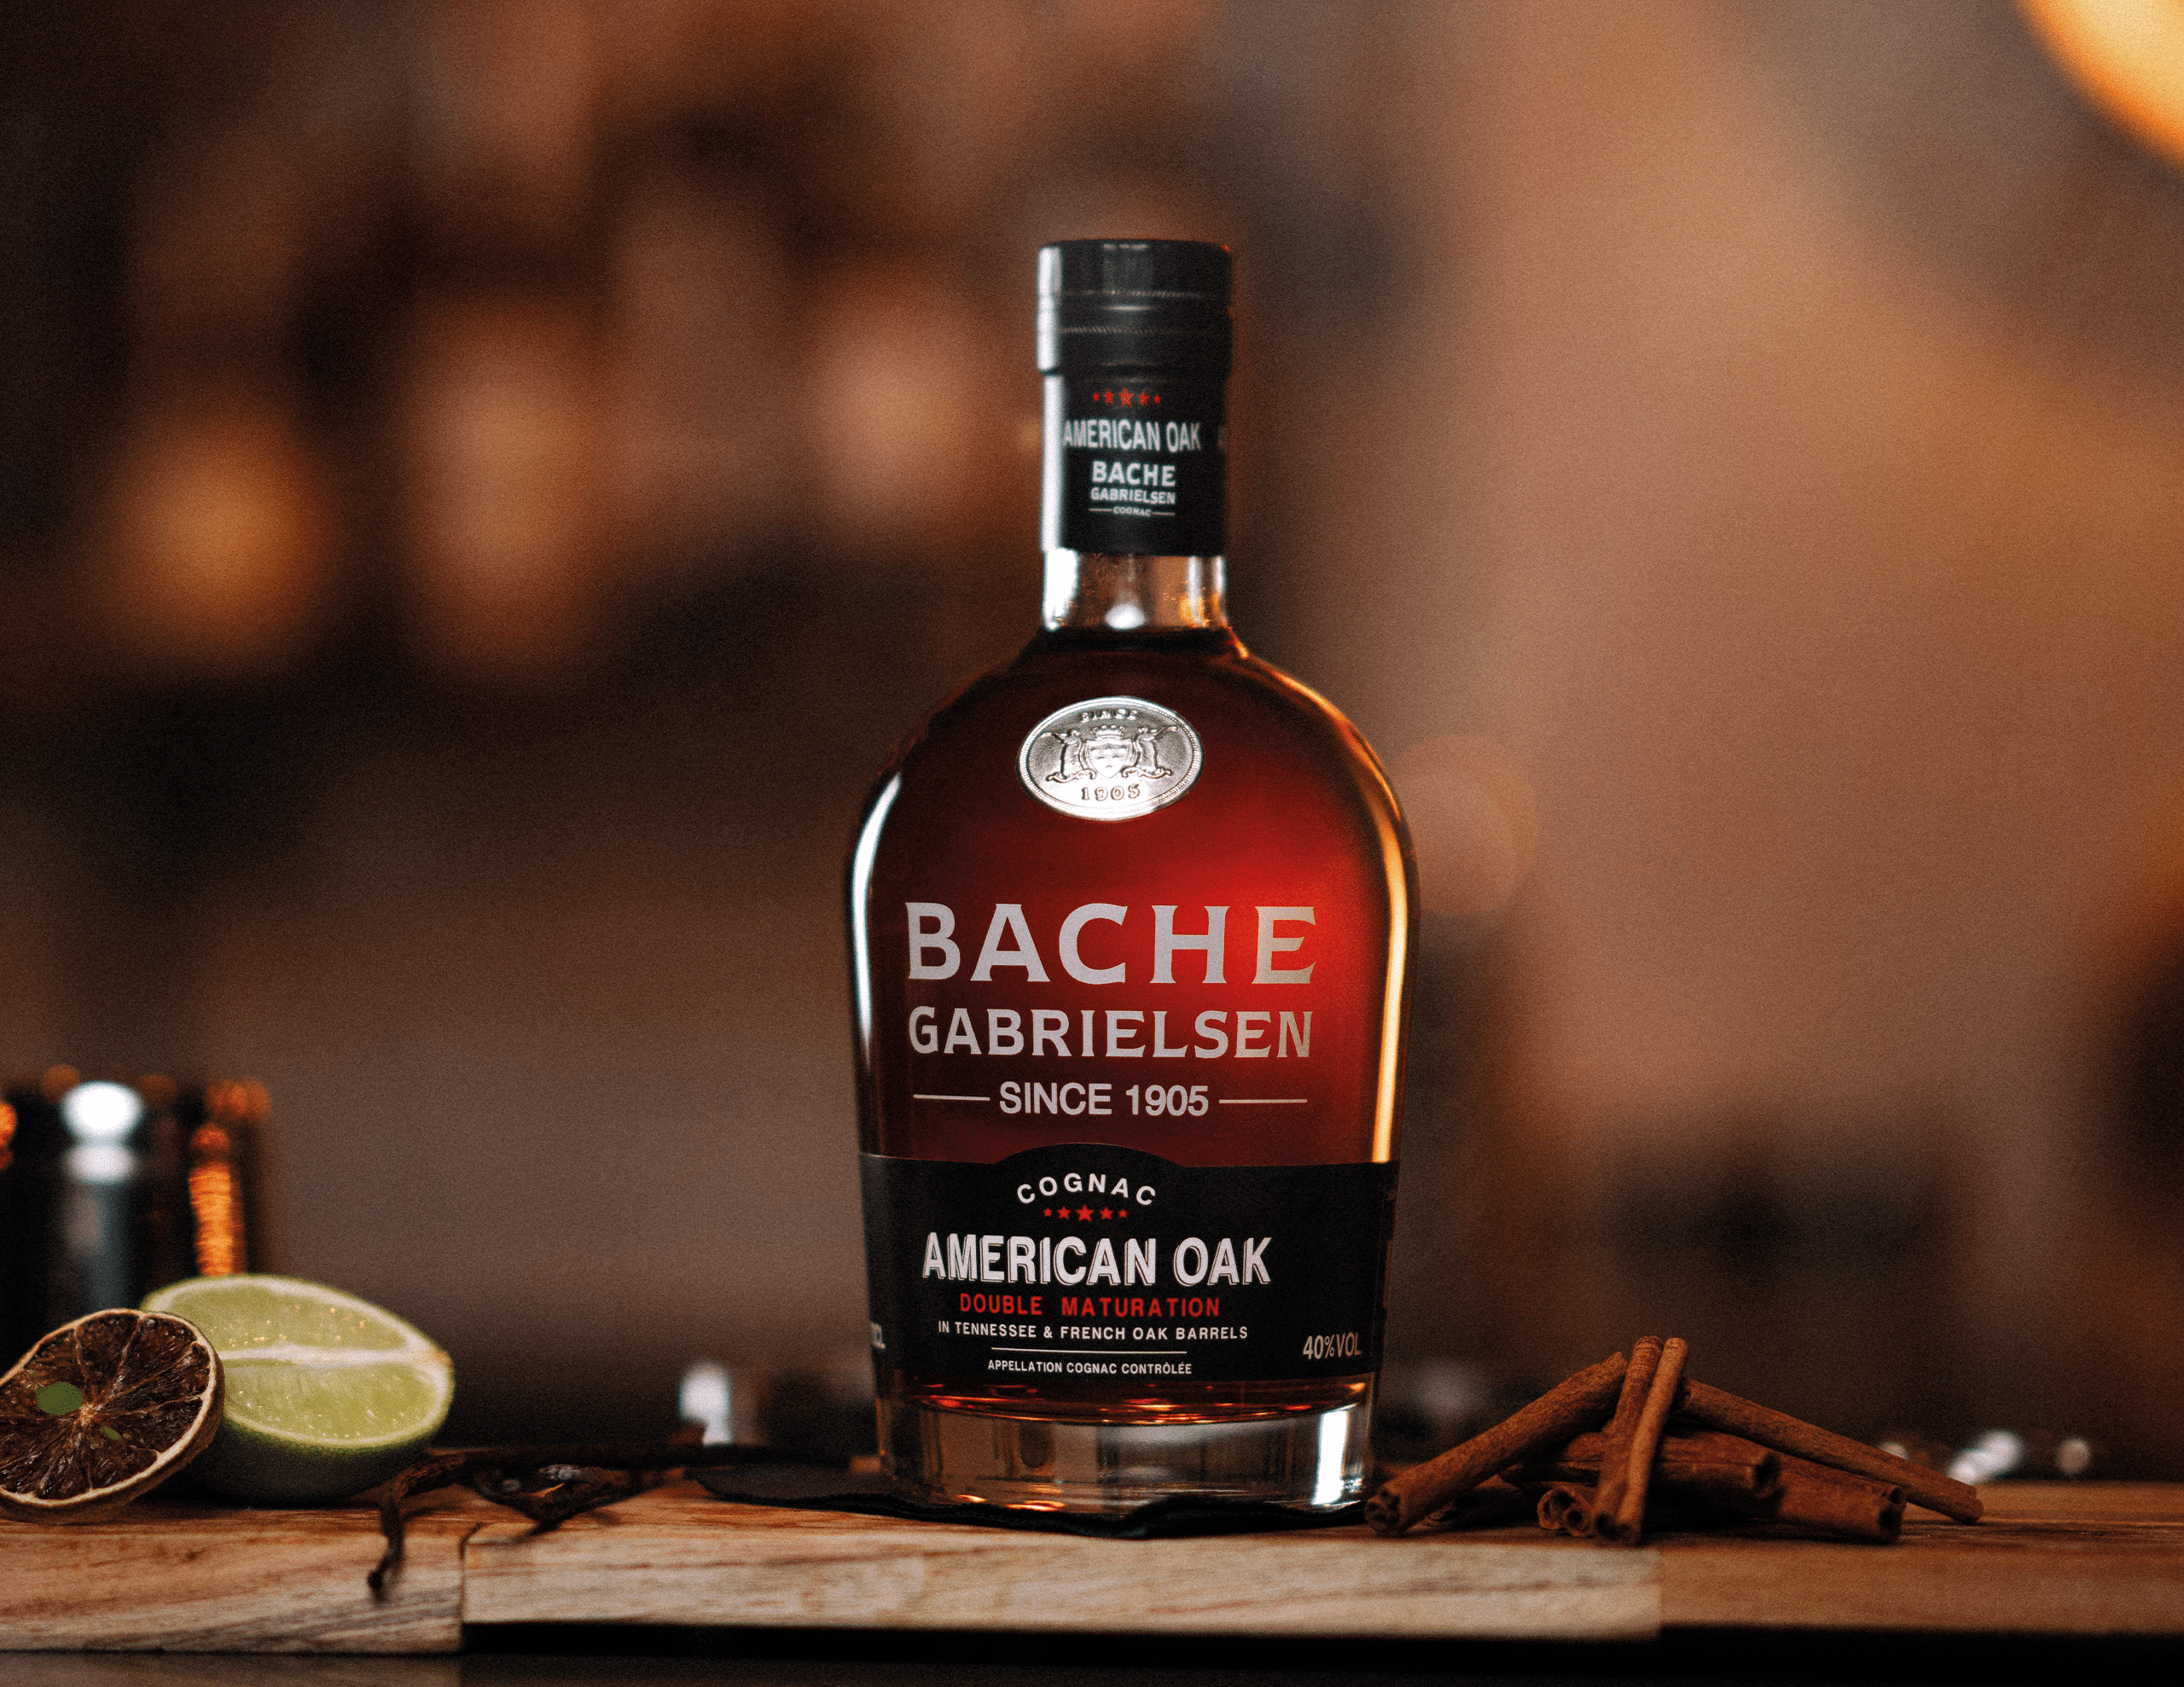 Bache Gabrielsen American Oak Cognac 